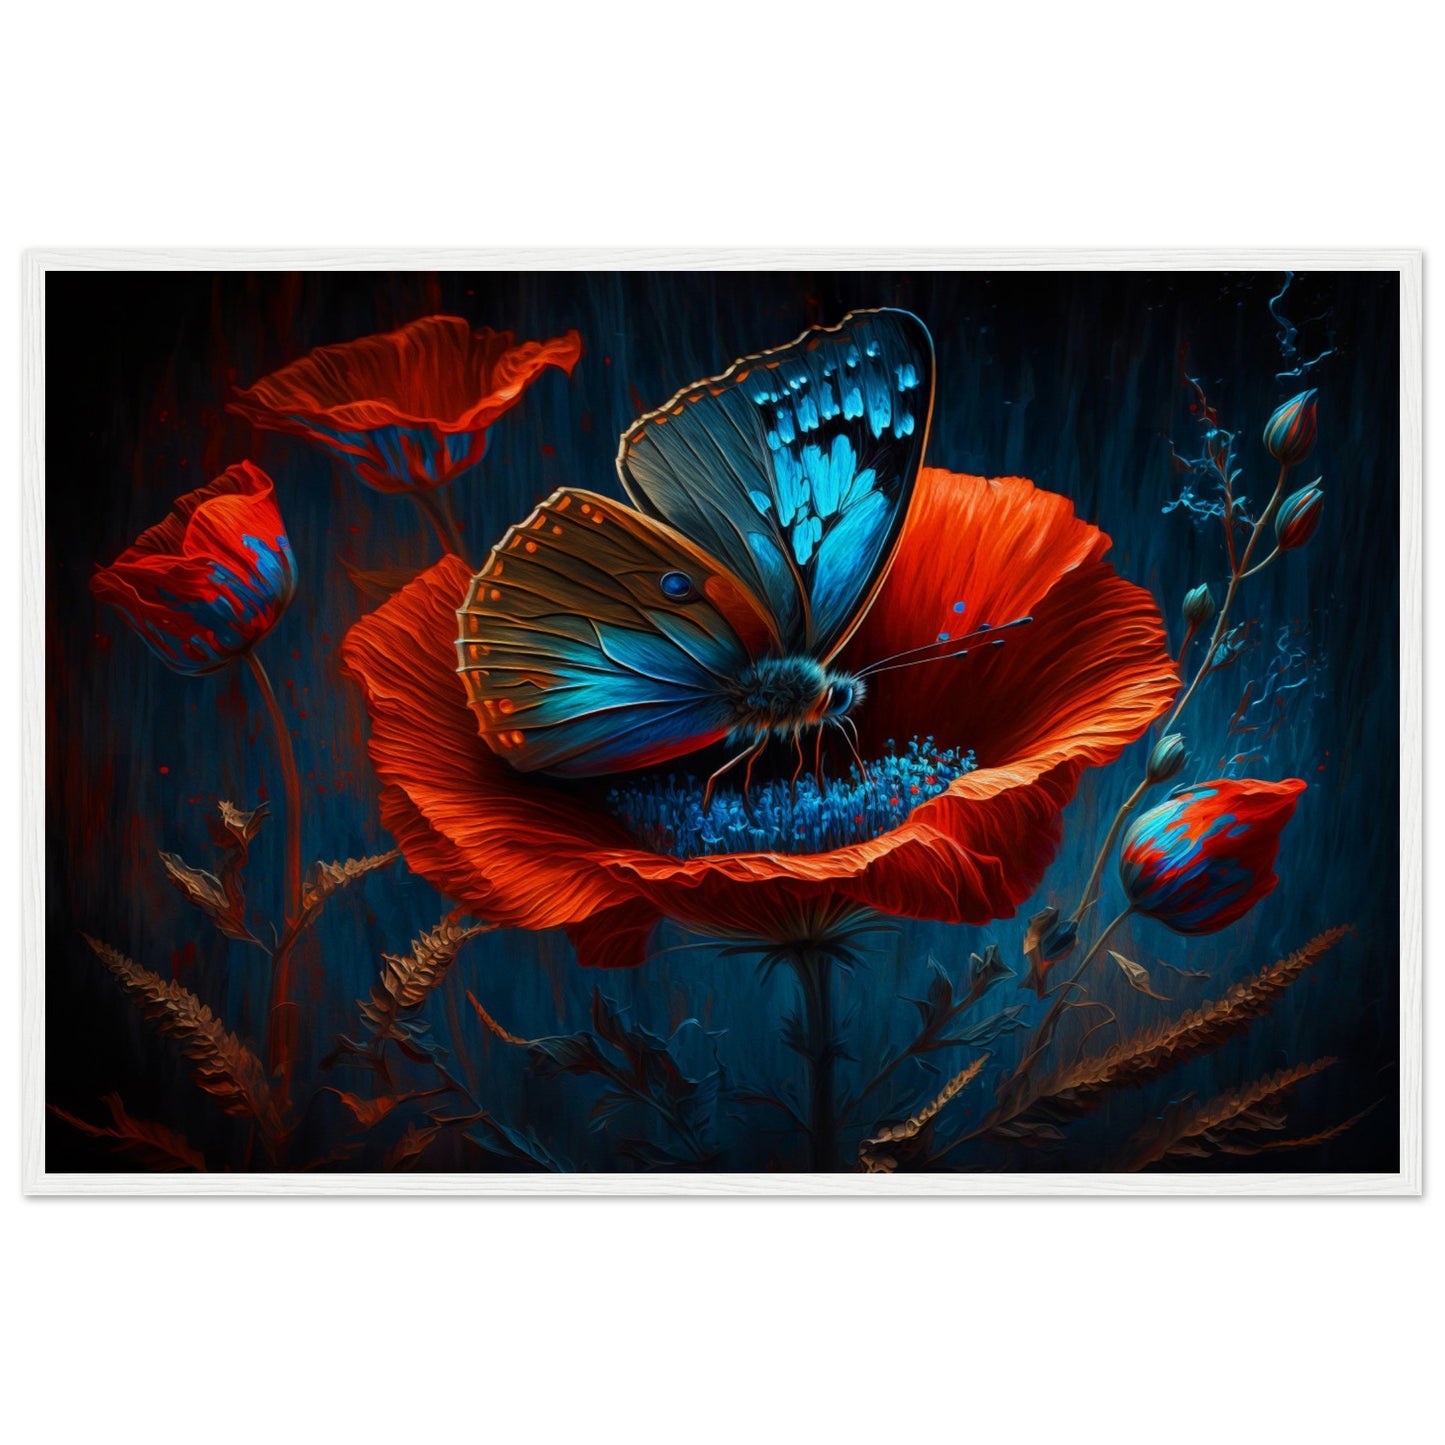 Blue morpho butterfly